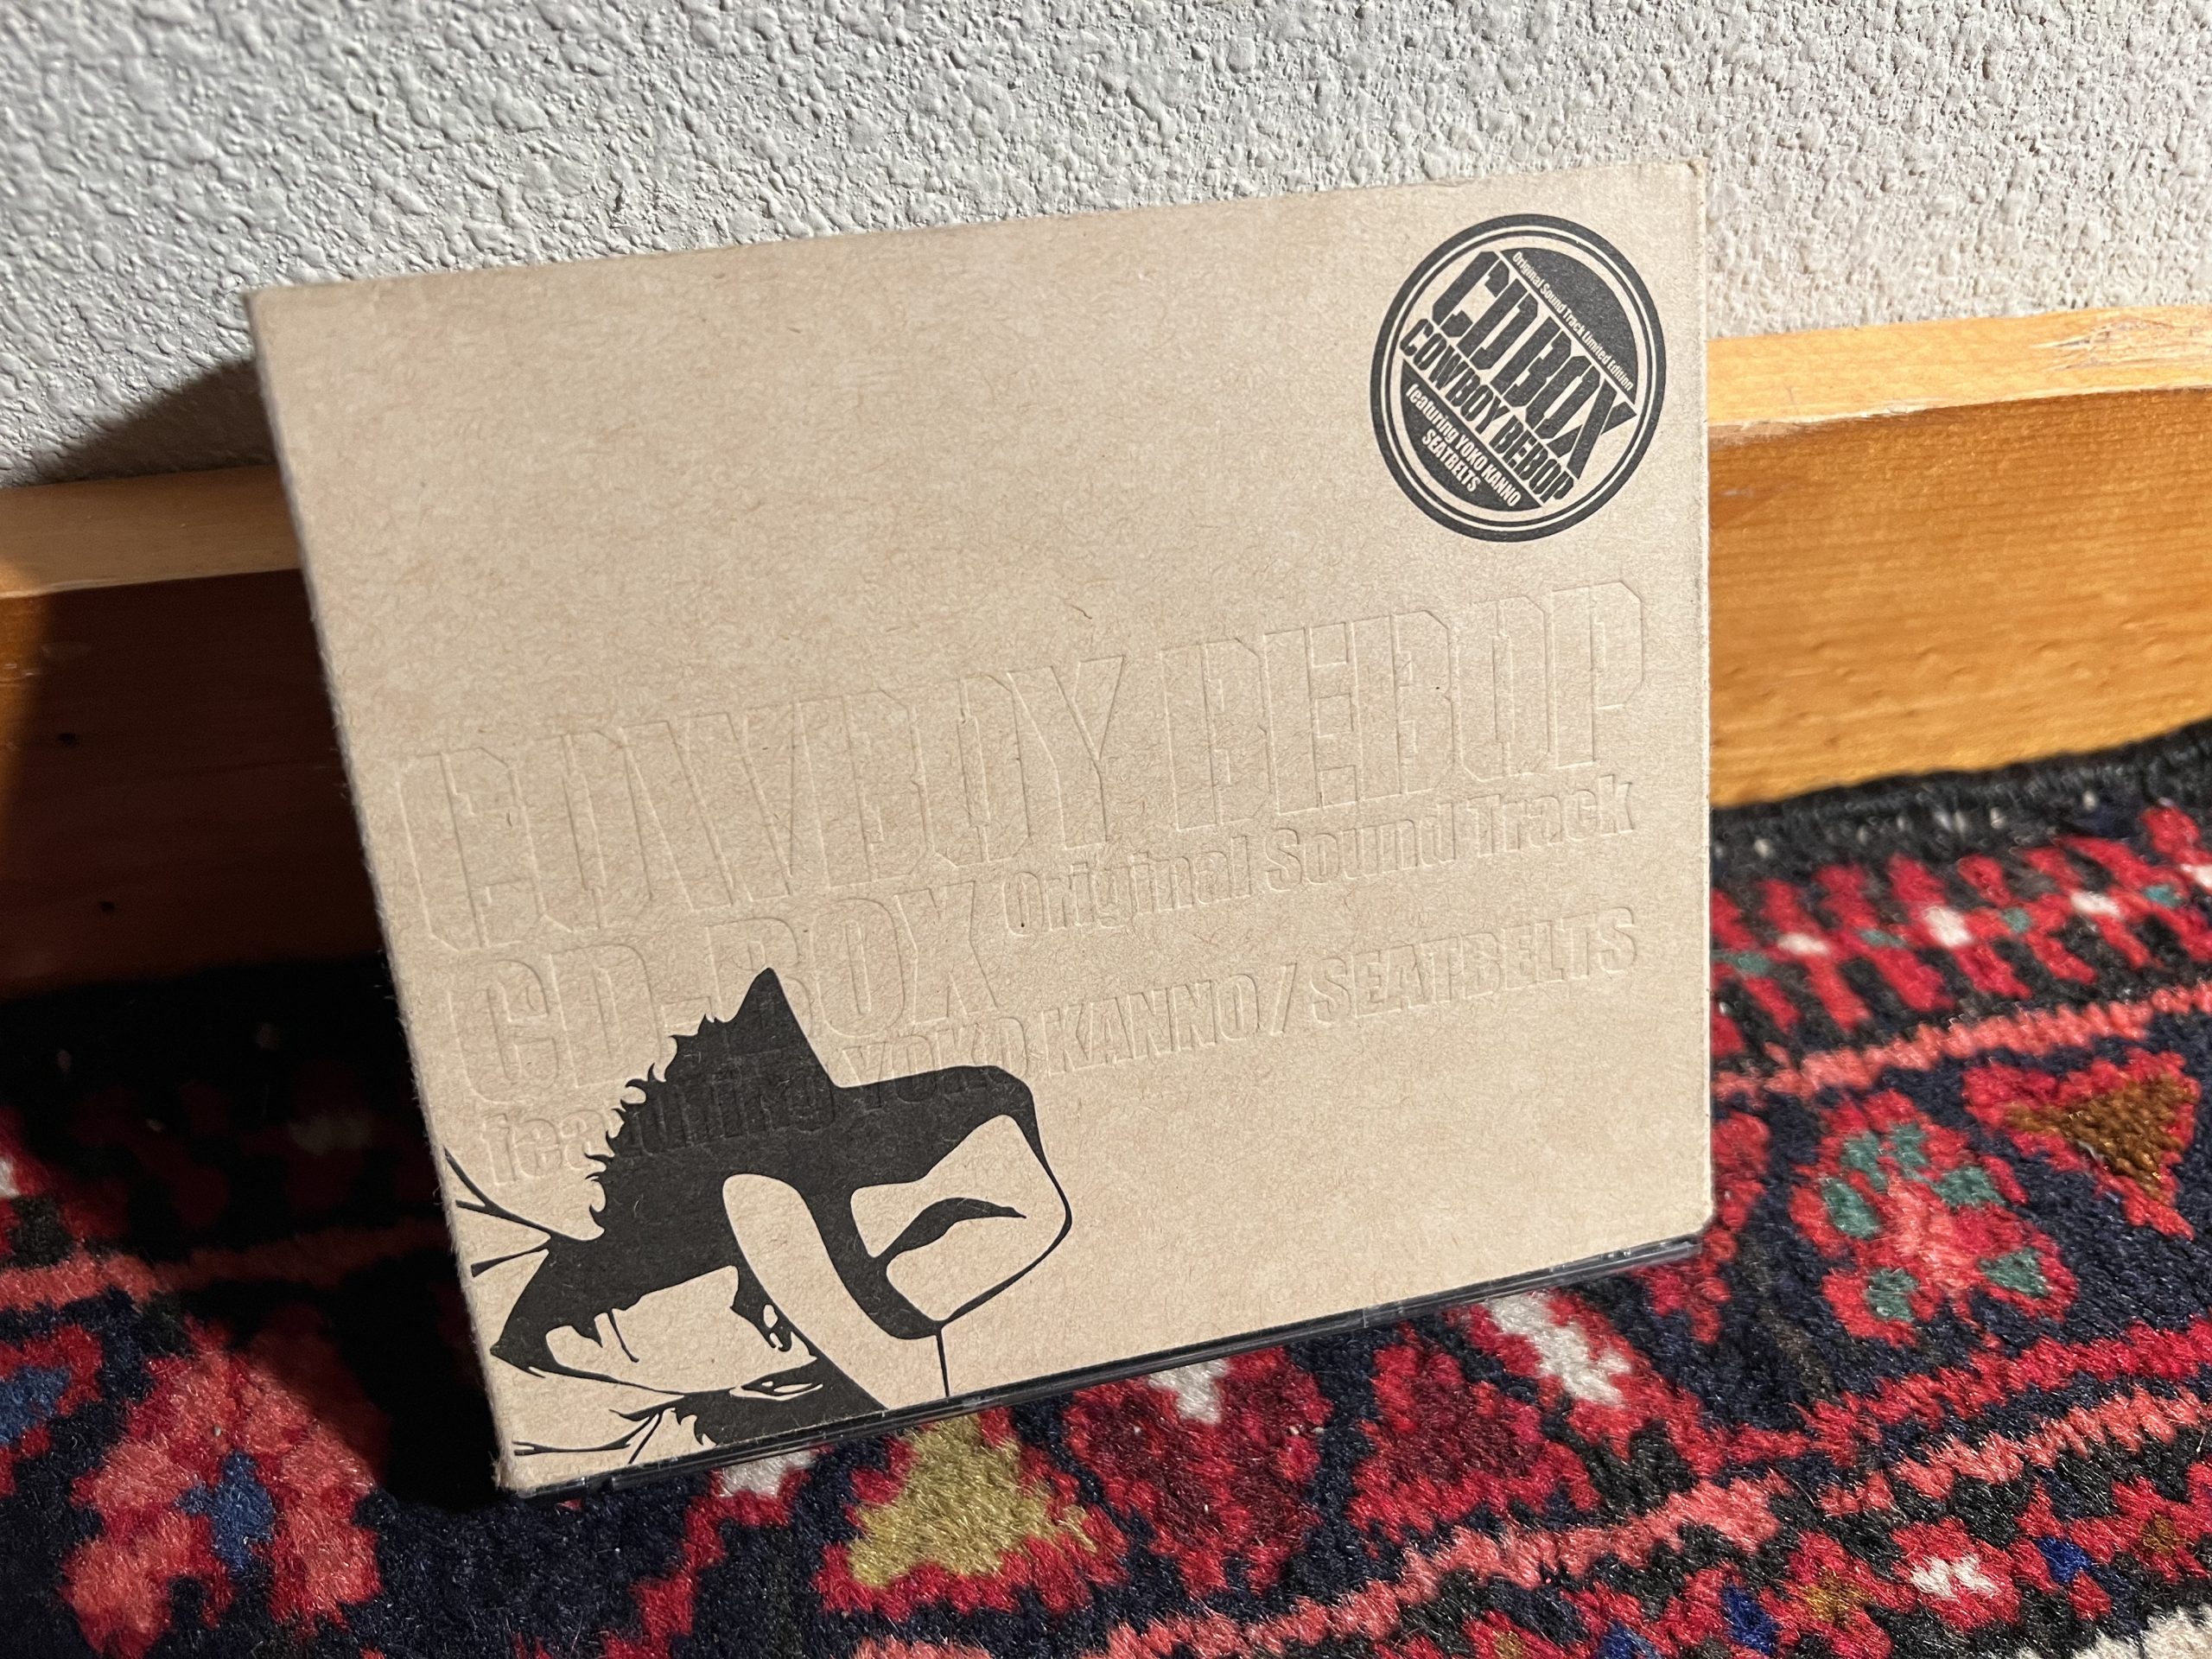 The Seatbelts, Yoko Kanno – Cowboy Bebop 4 CD-Box Original Sound Track